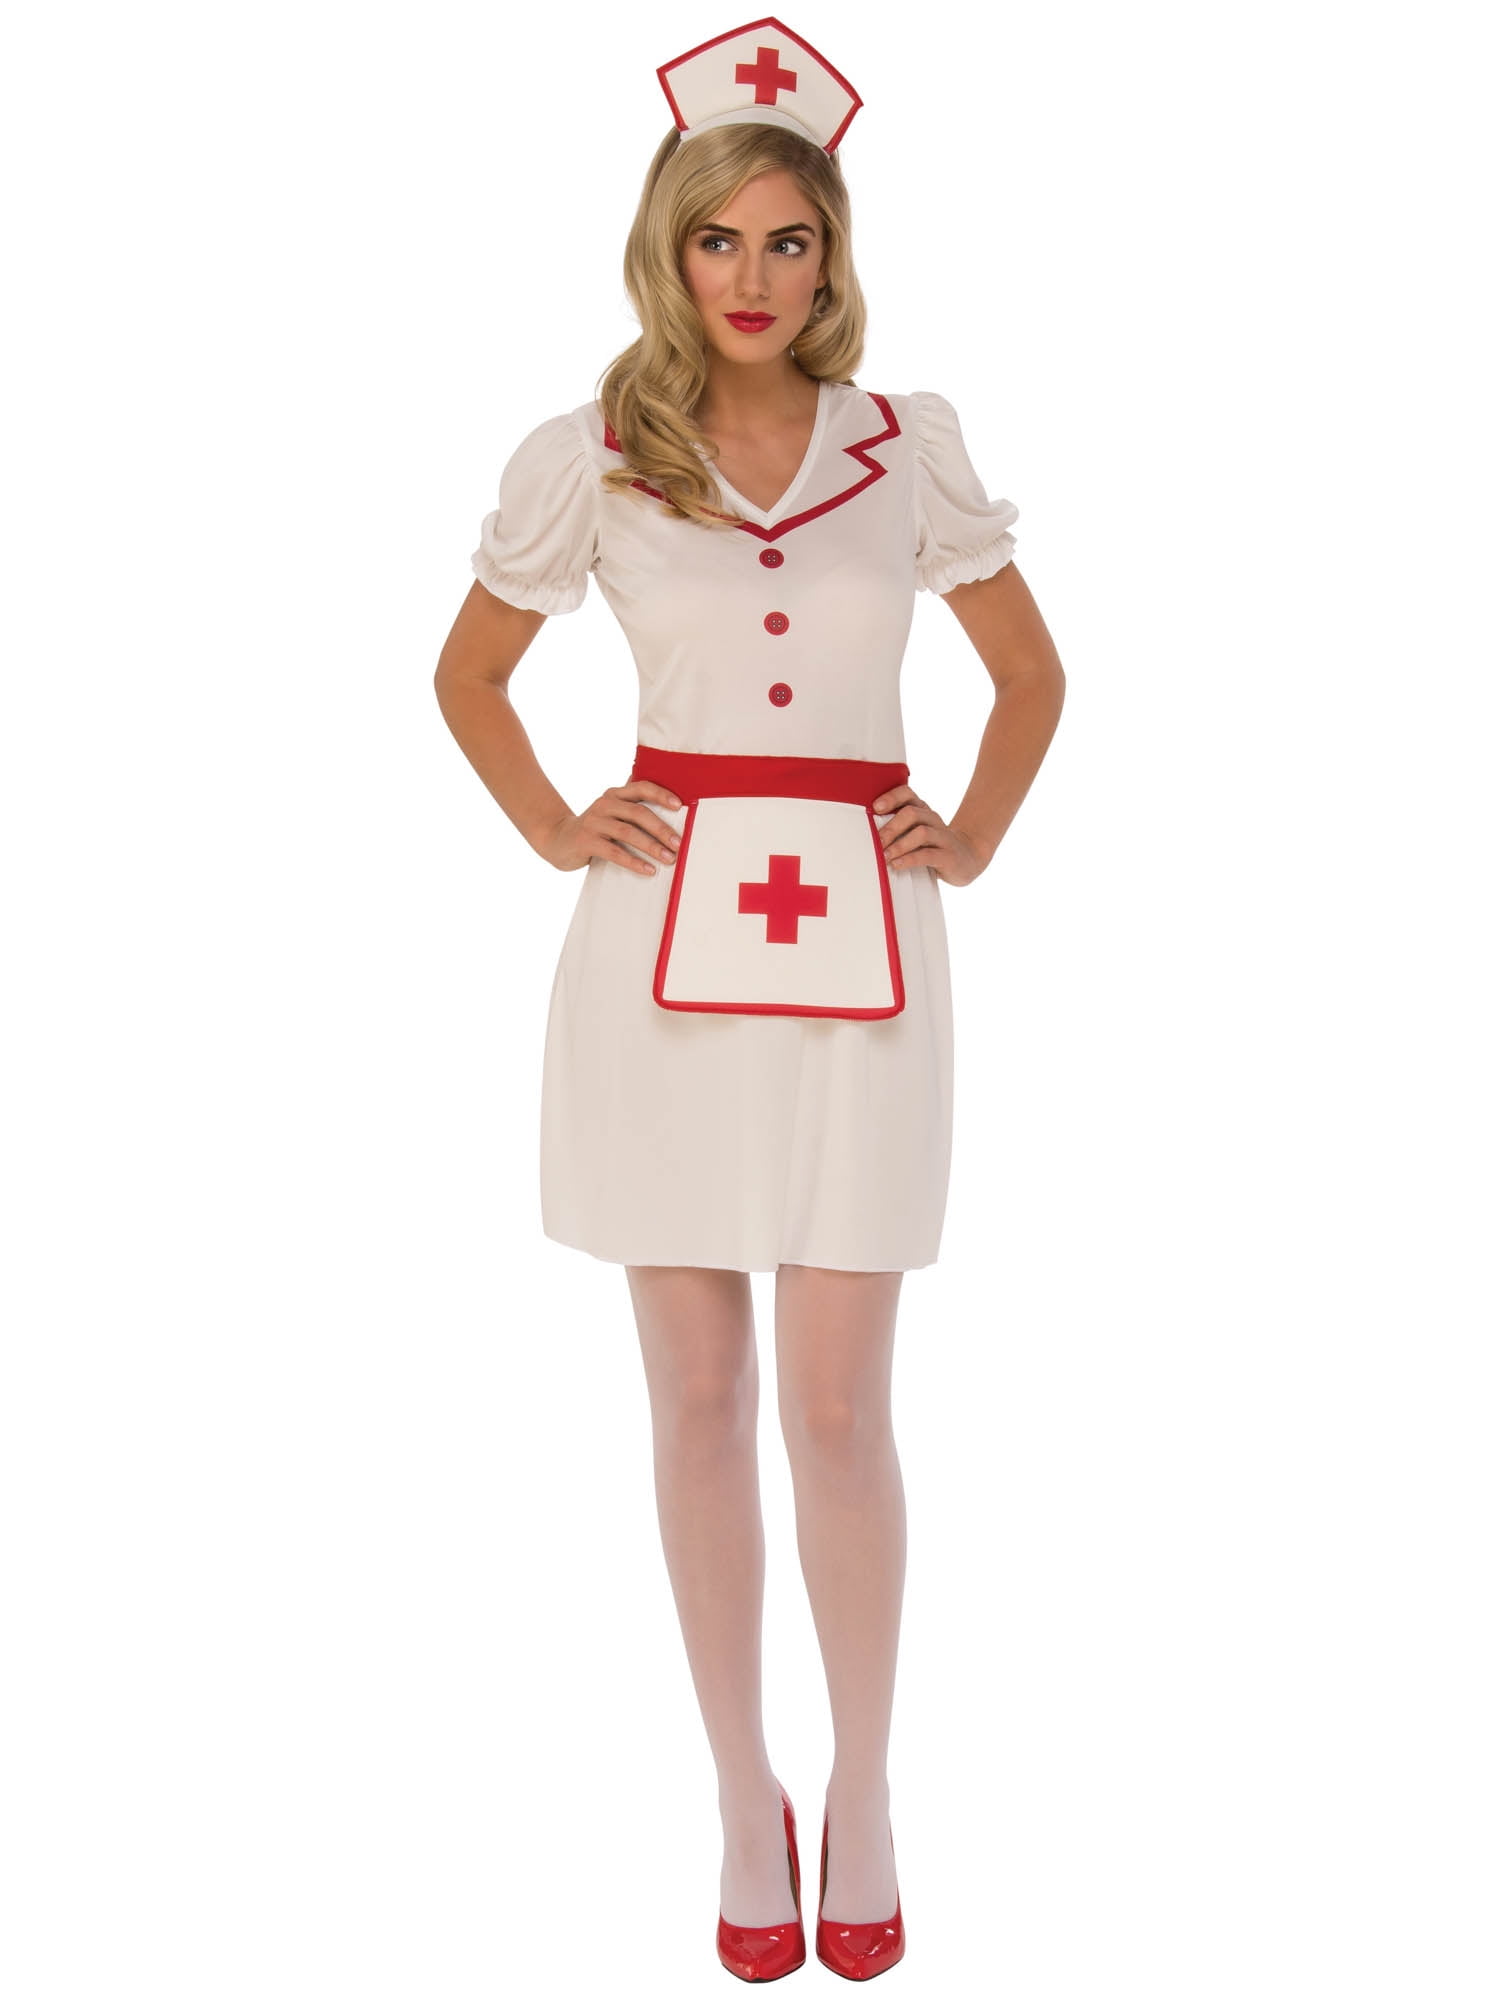 Nurse Halloween Costume - Walmart.com